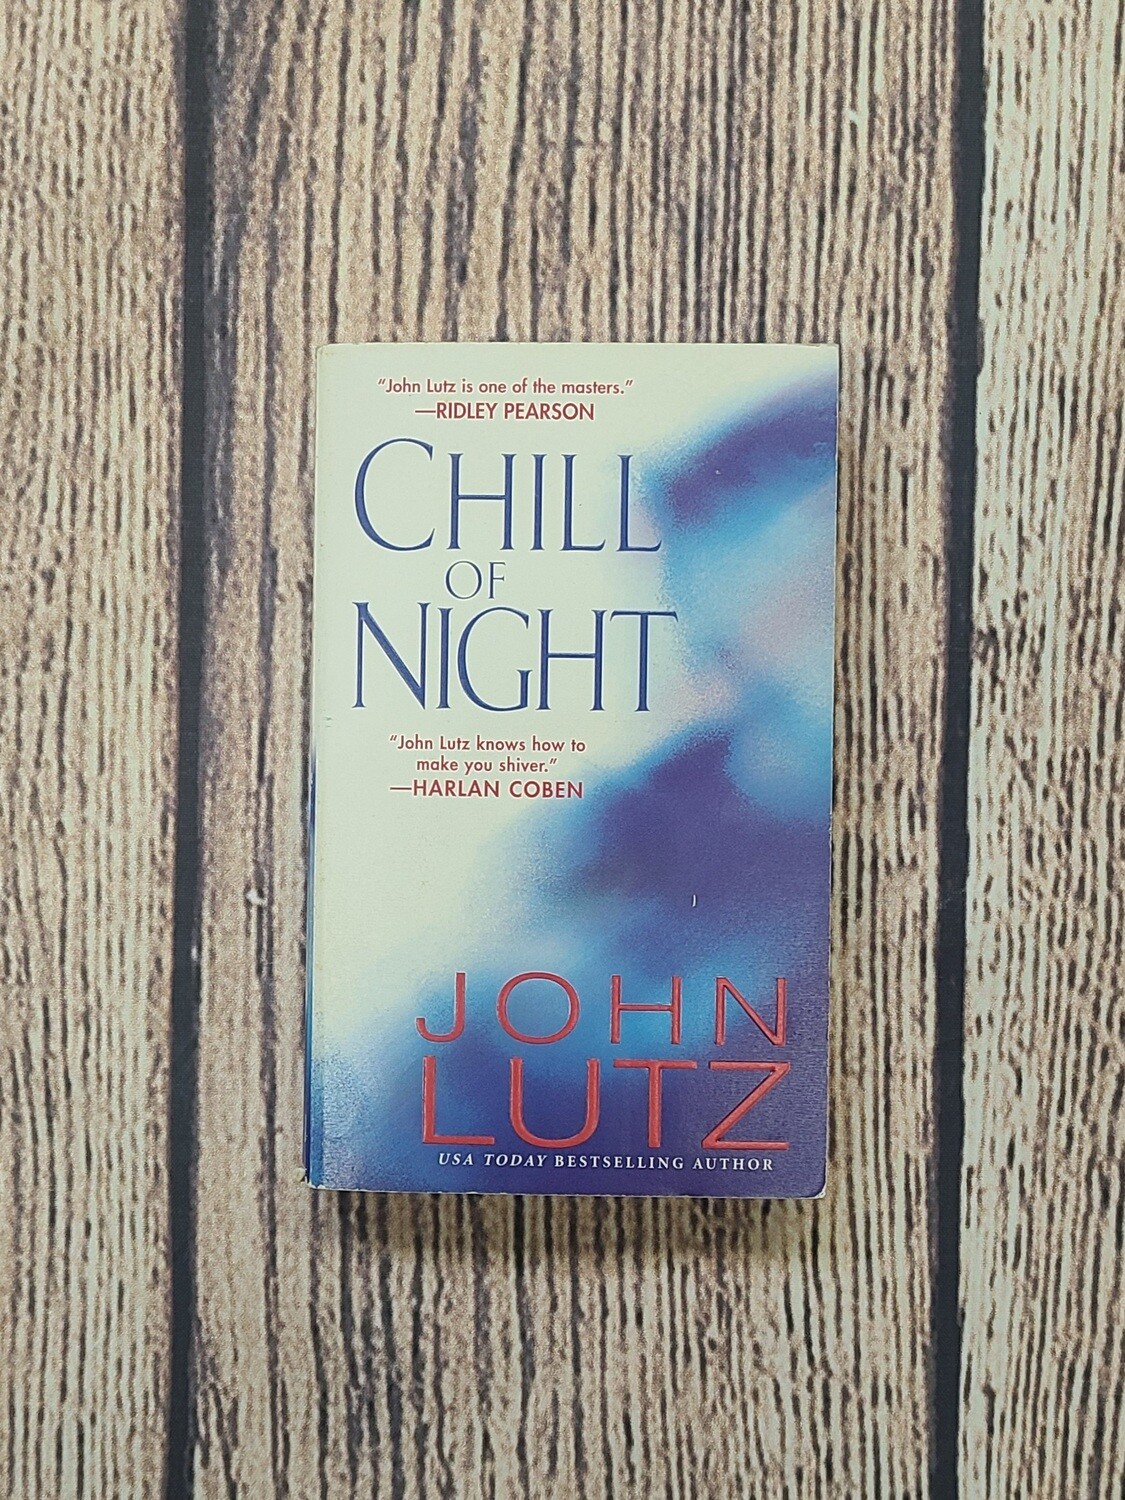 Chill of Night by John Lutz